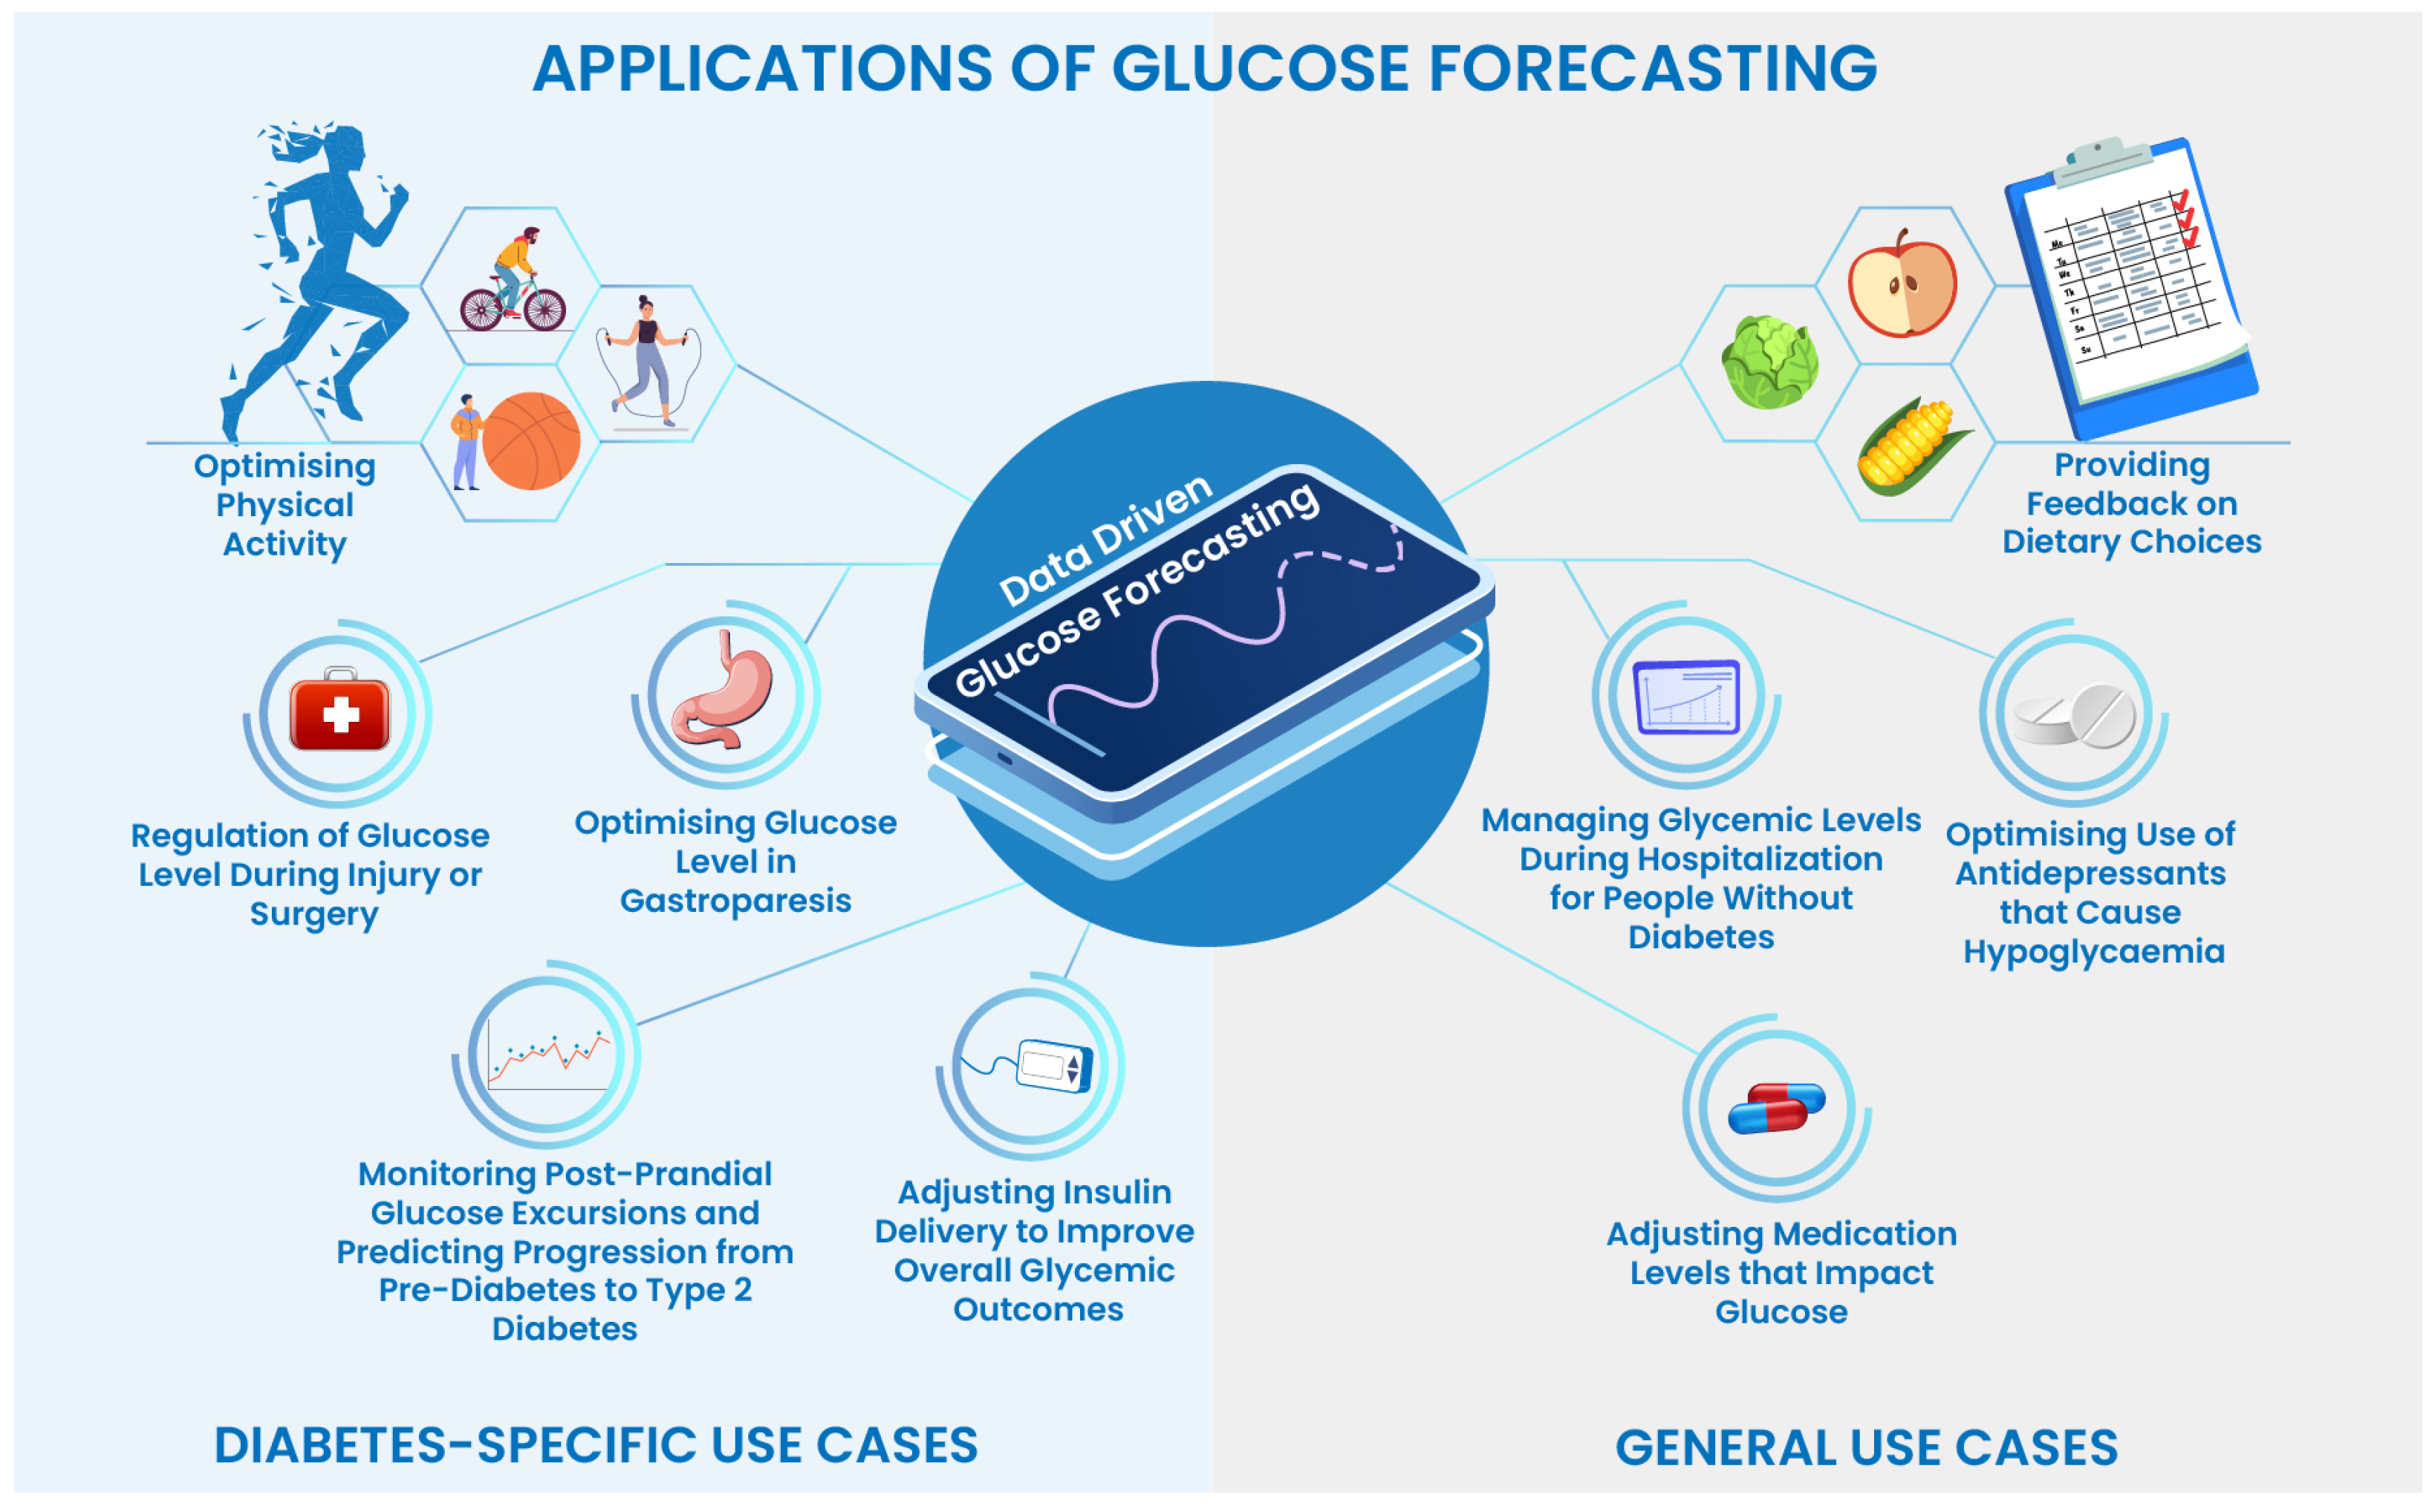 Automated glucose regulation